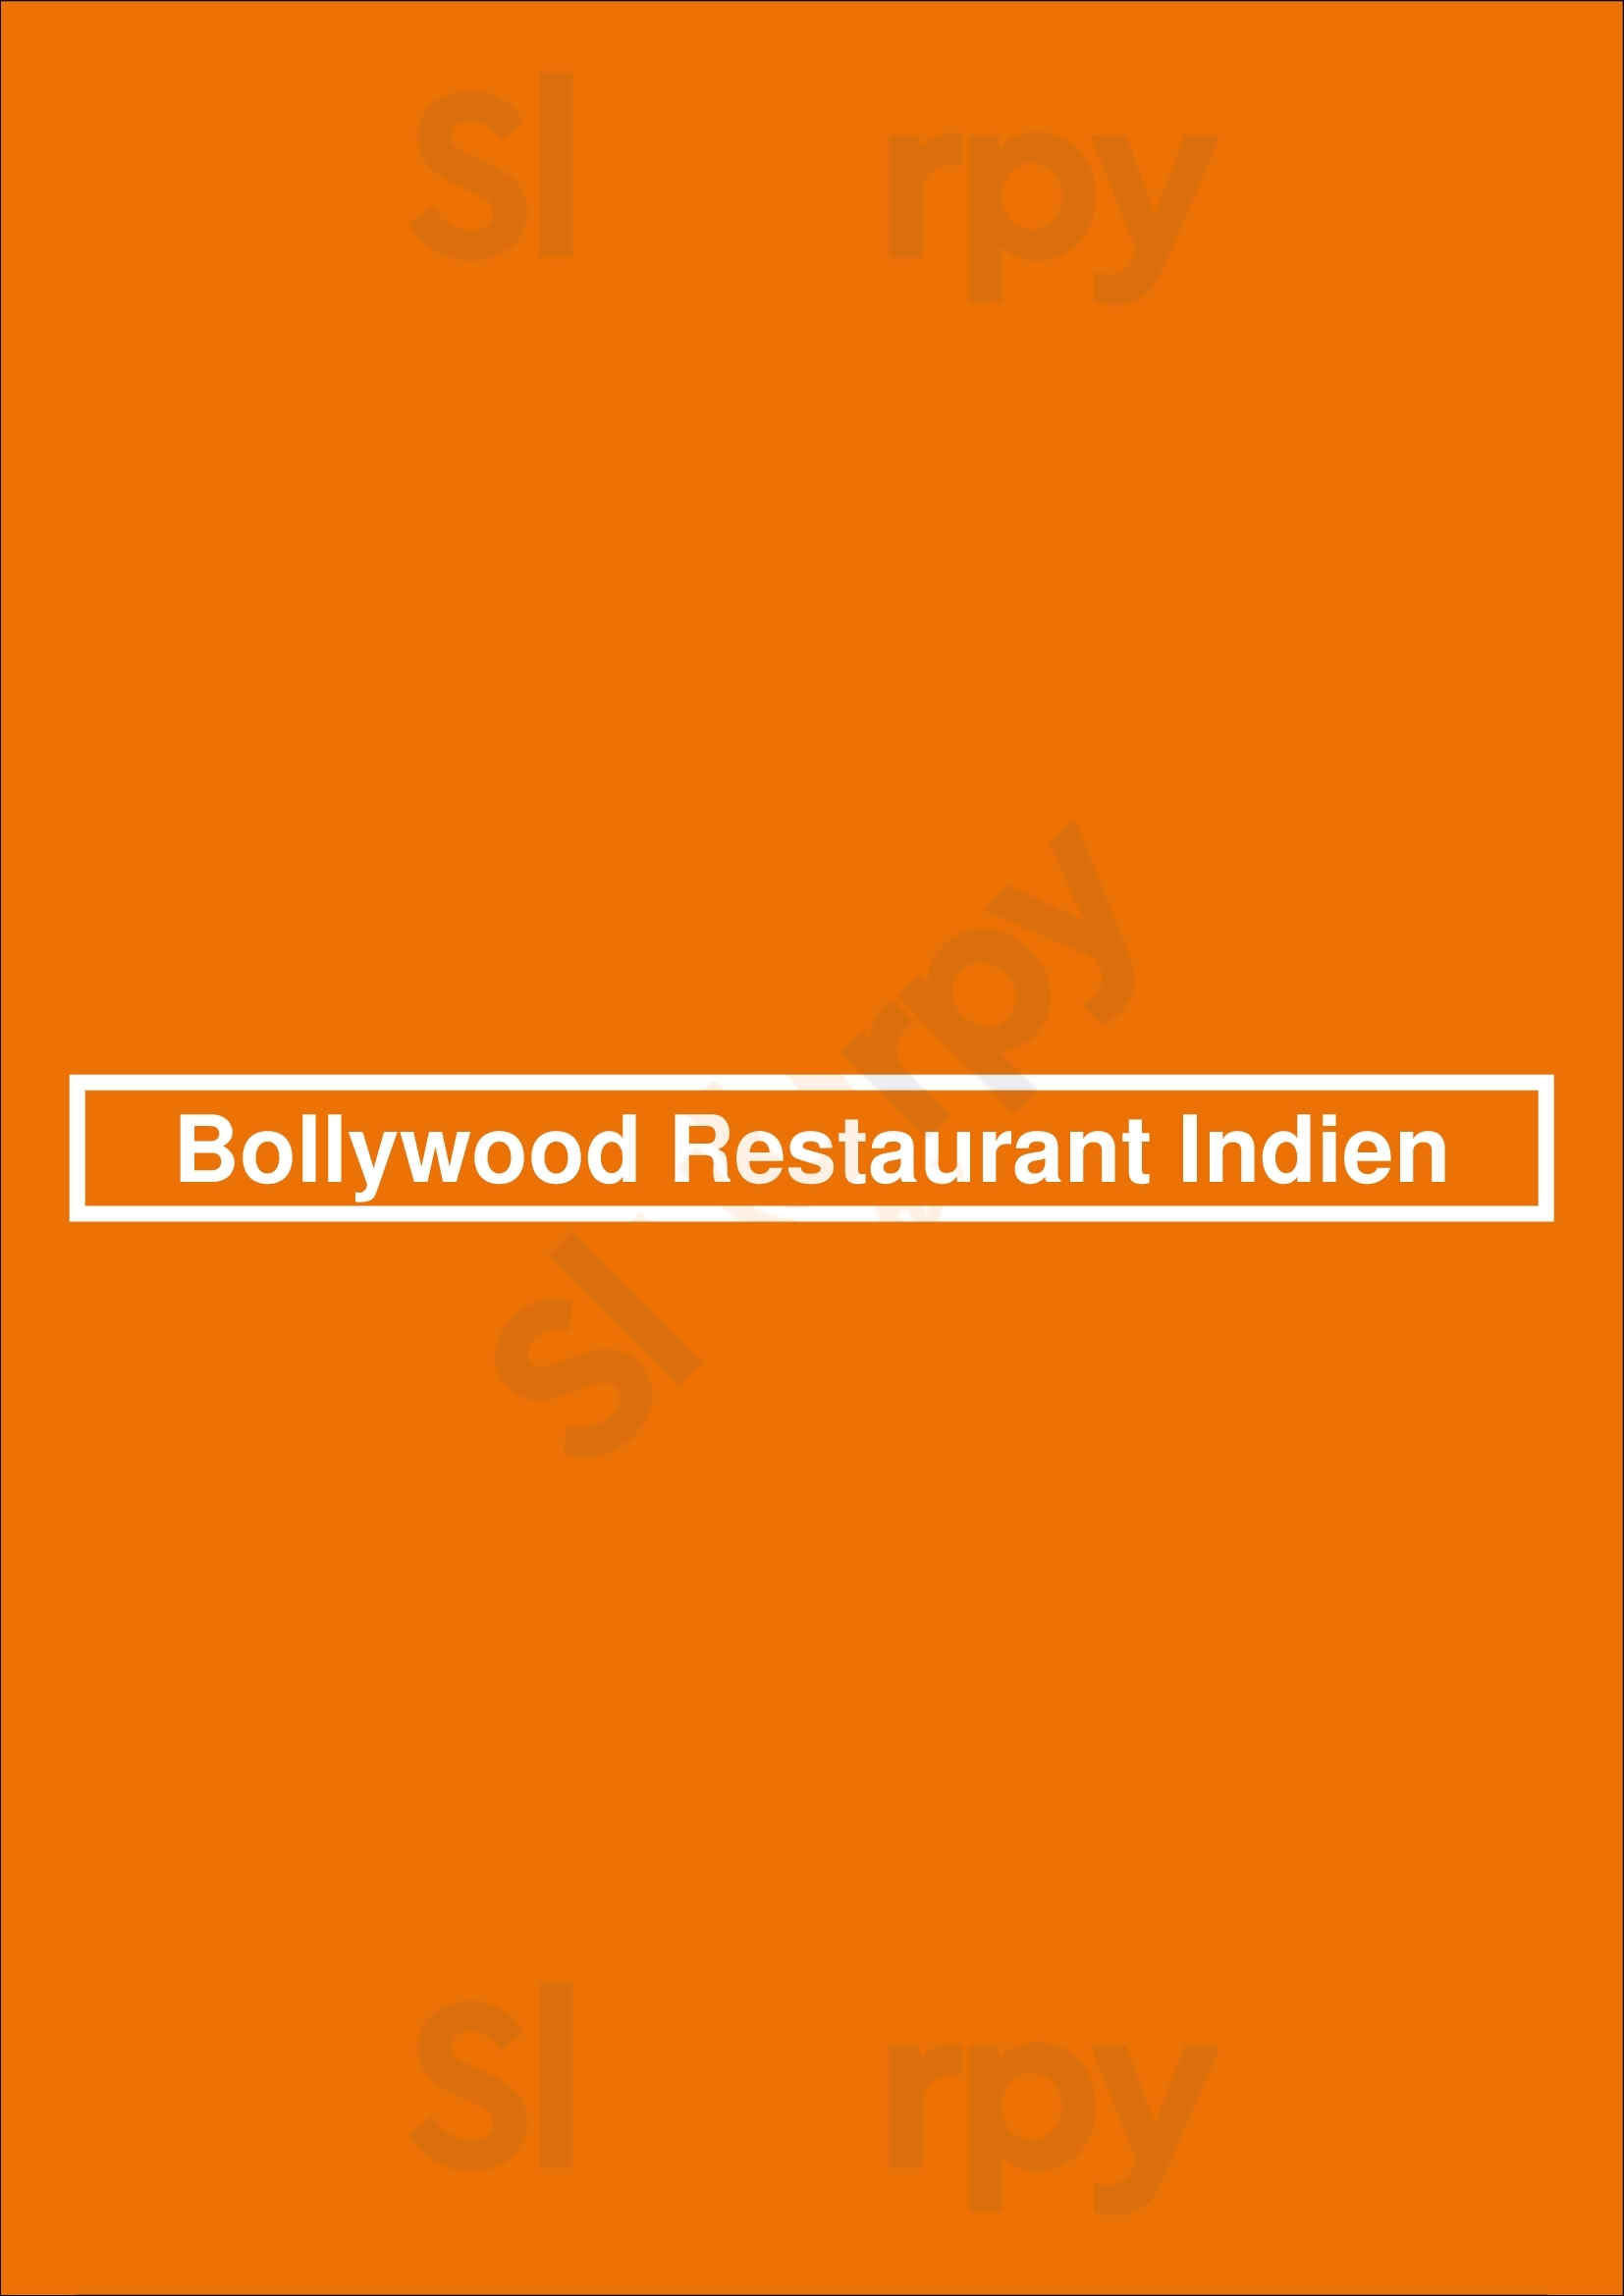 Bollywood Restaurant Indien Overijse Menu - 1